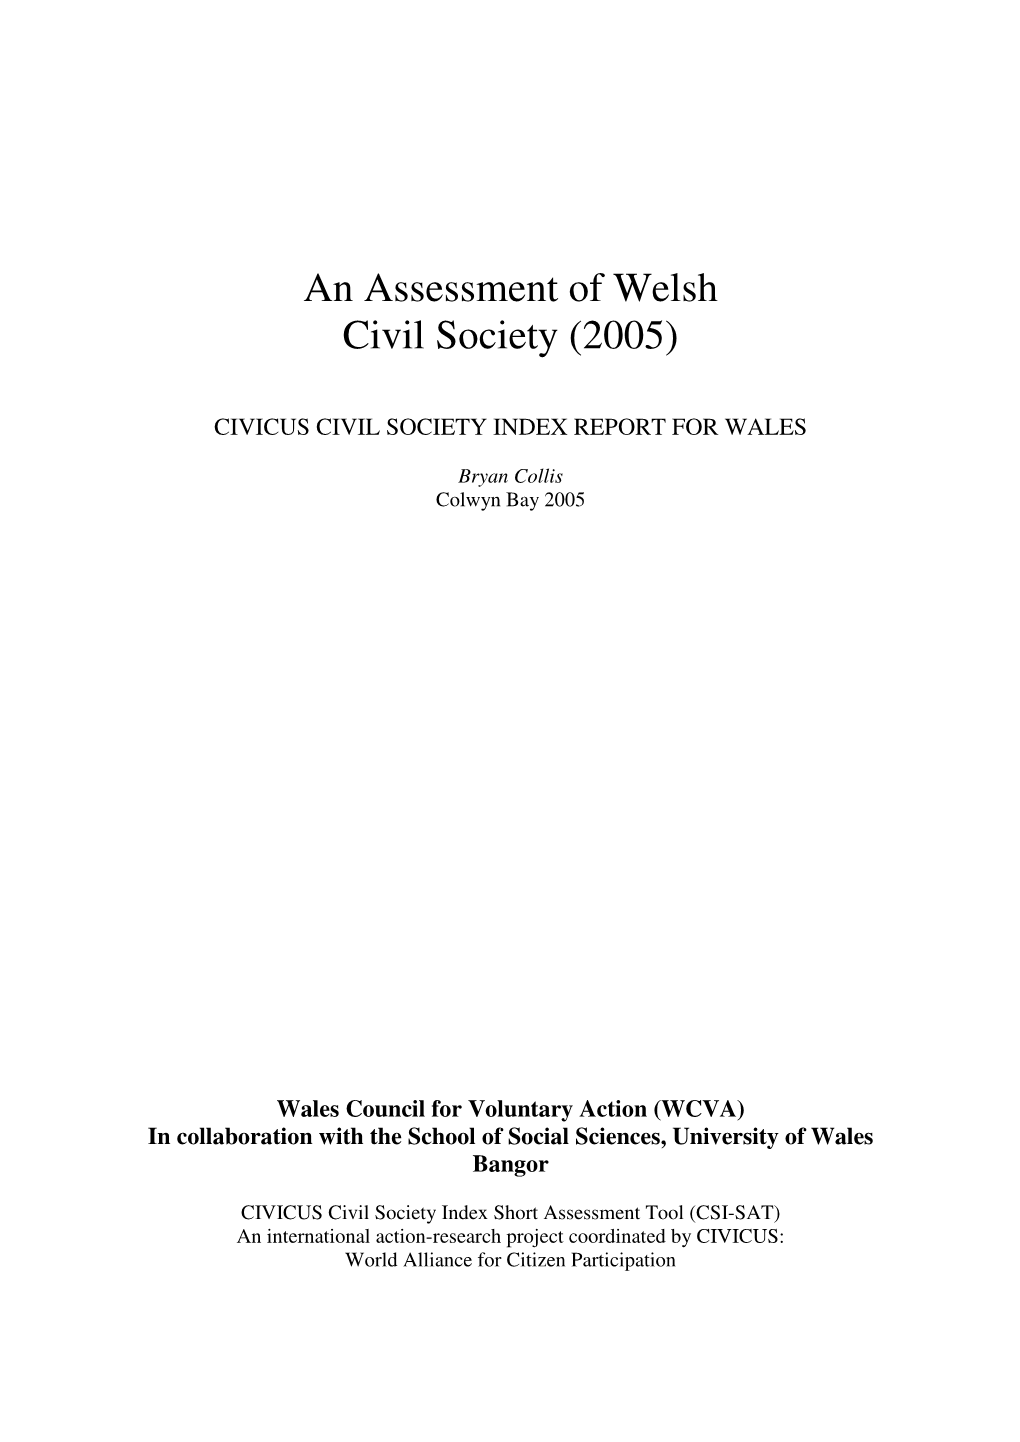 An Assessment of Welsh Civil Society (2005)